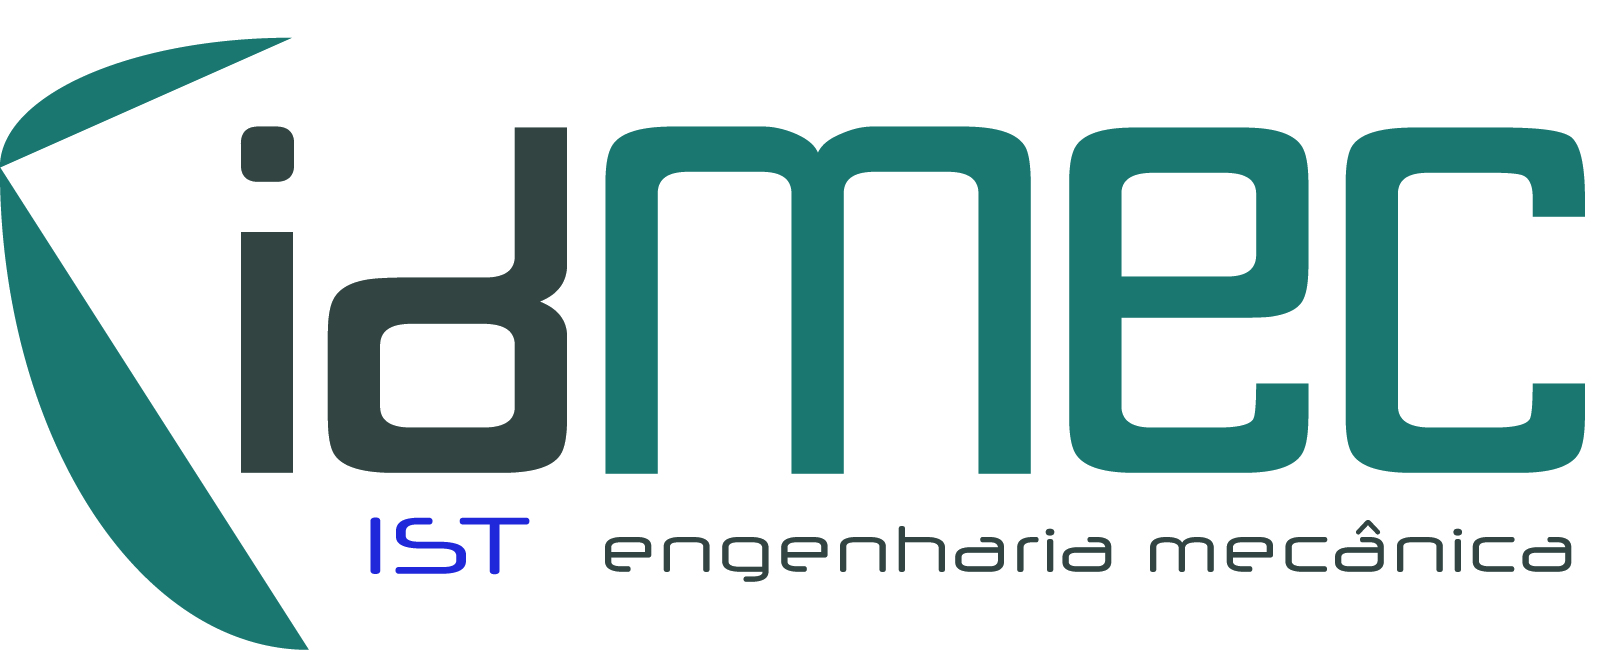 Biomechanics Research Group